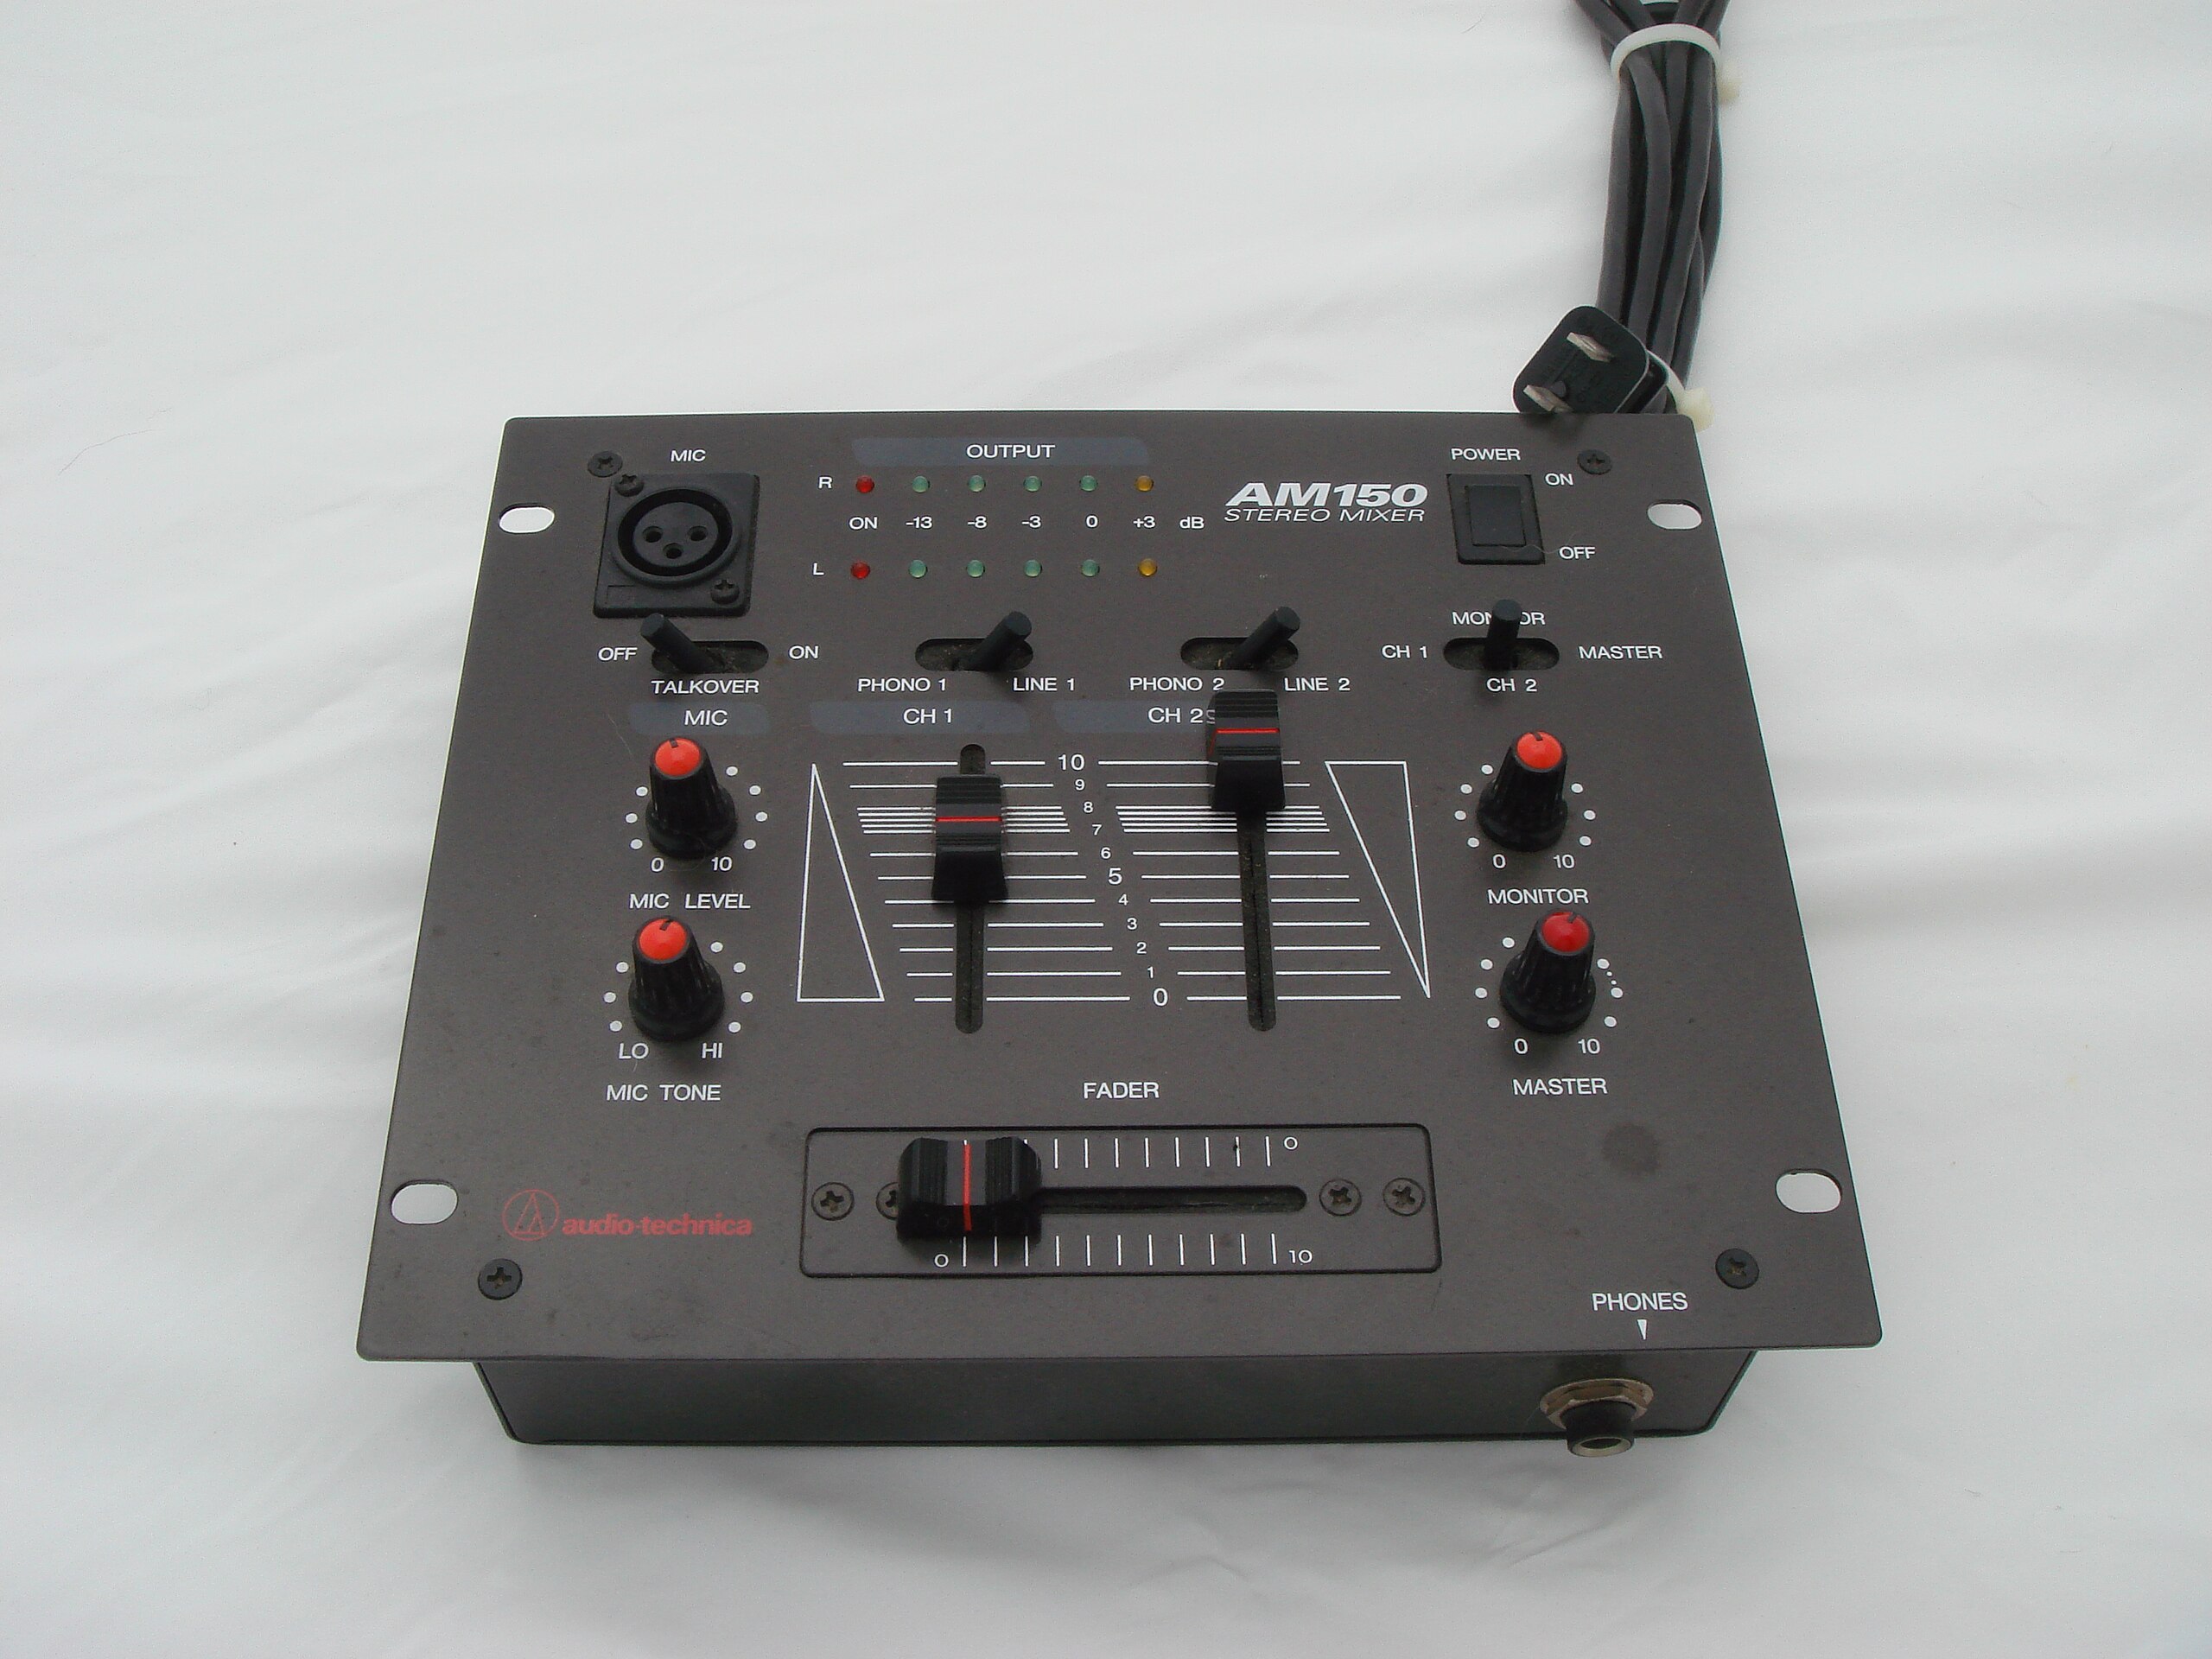 AM150 Stereo Mixer.jpg - Wikimedia Commons